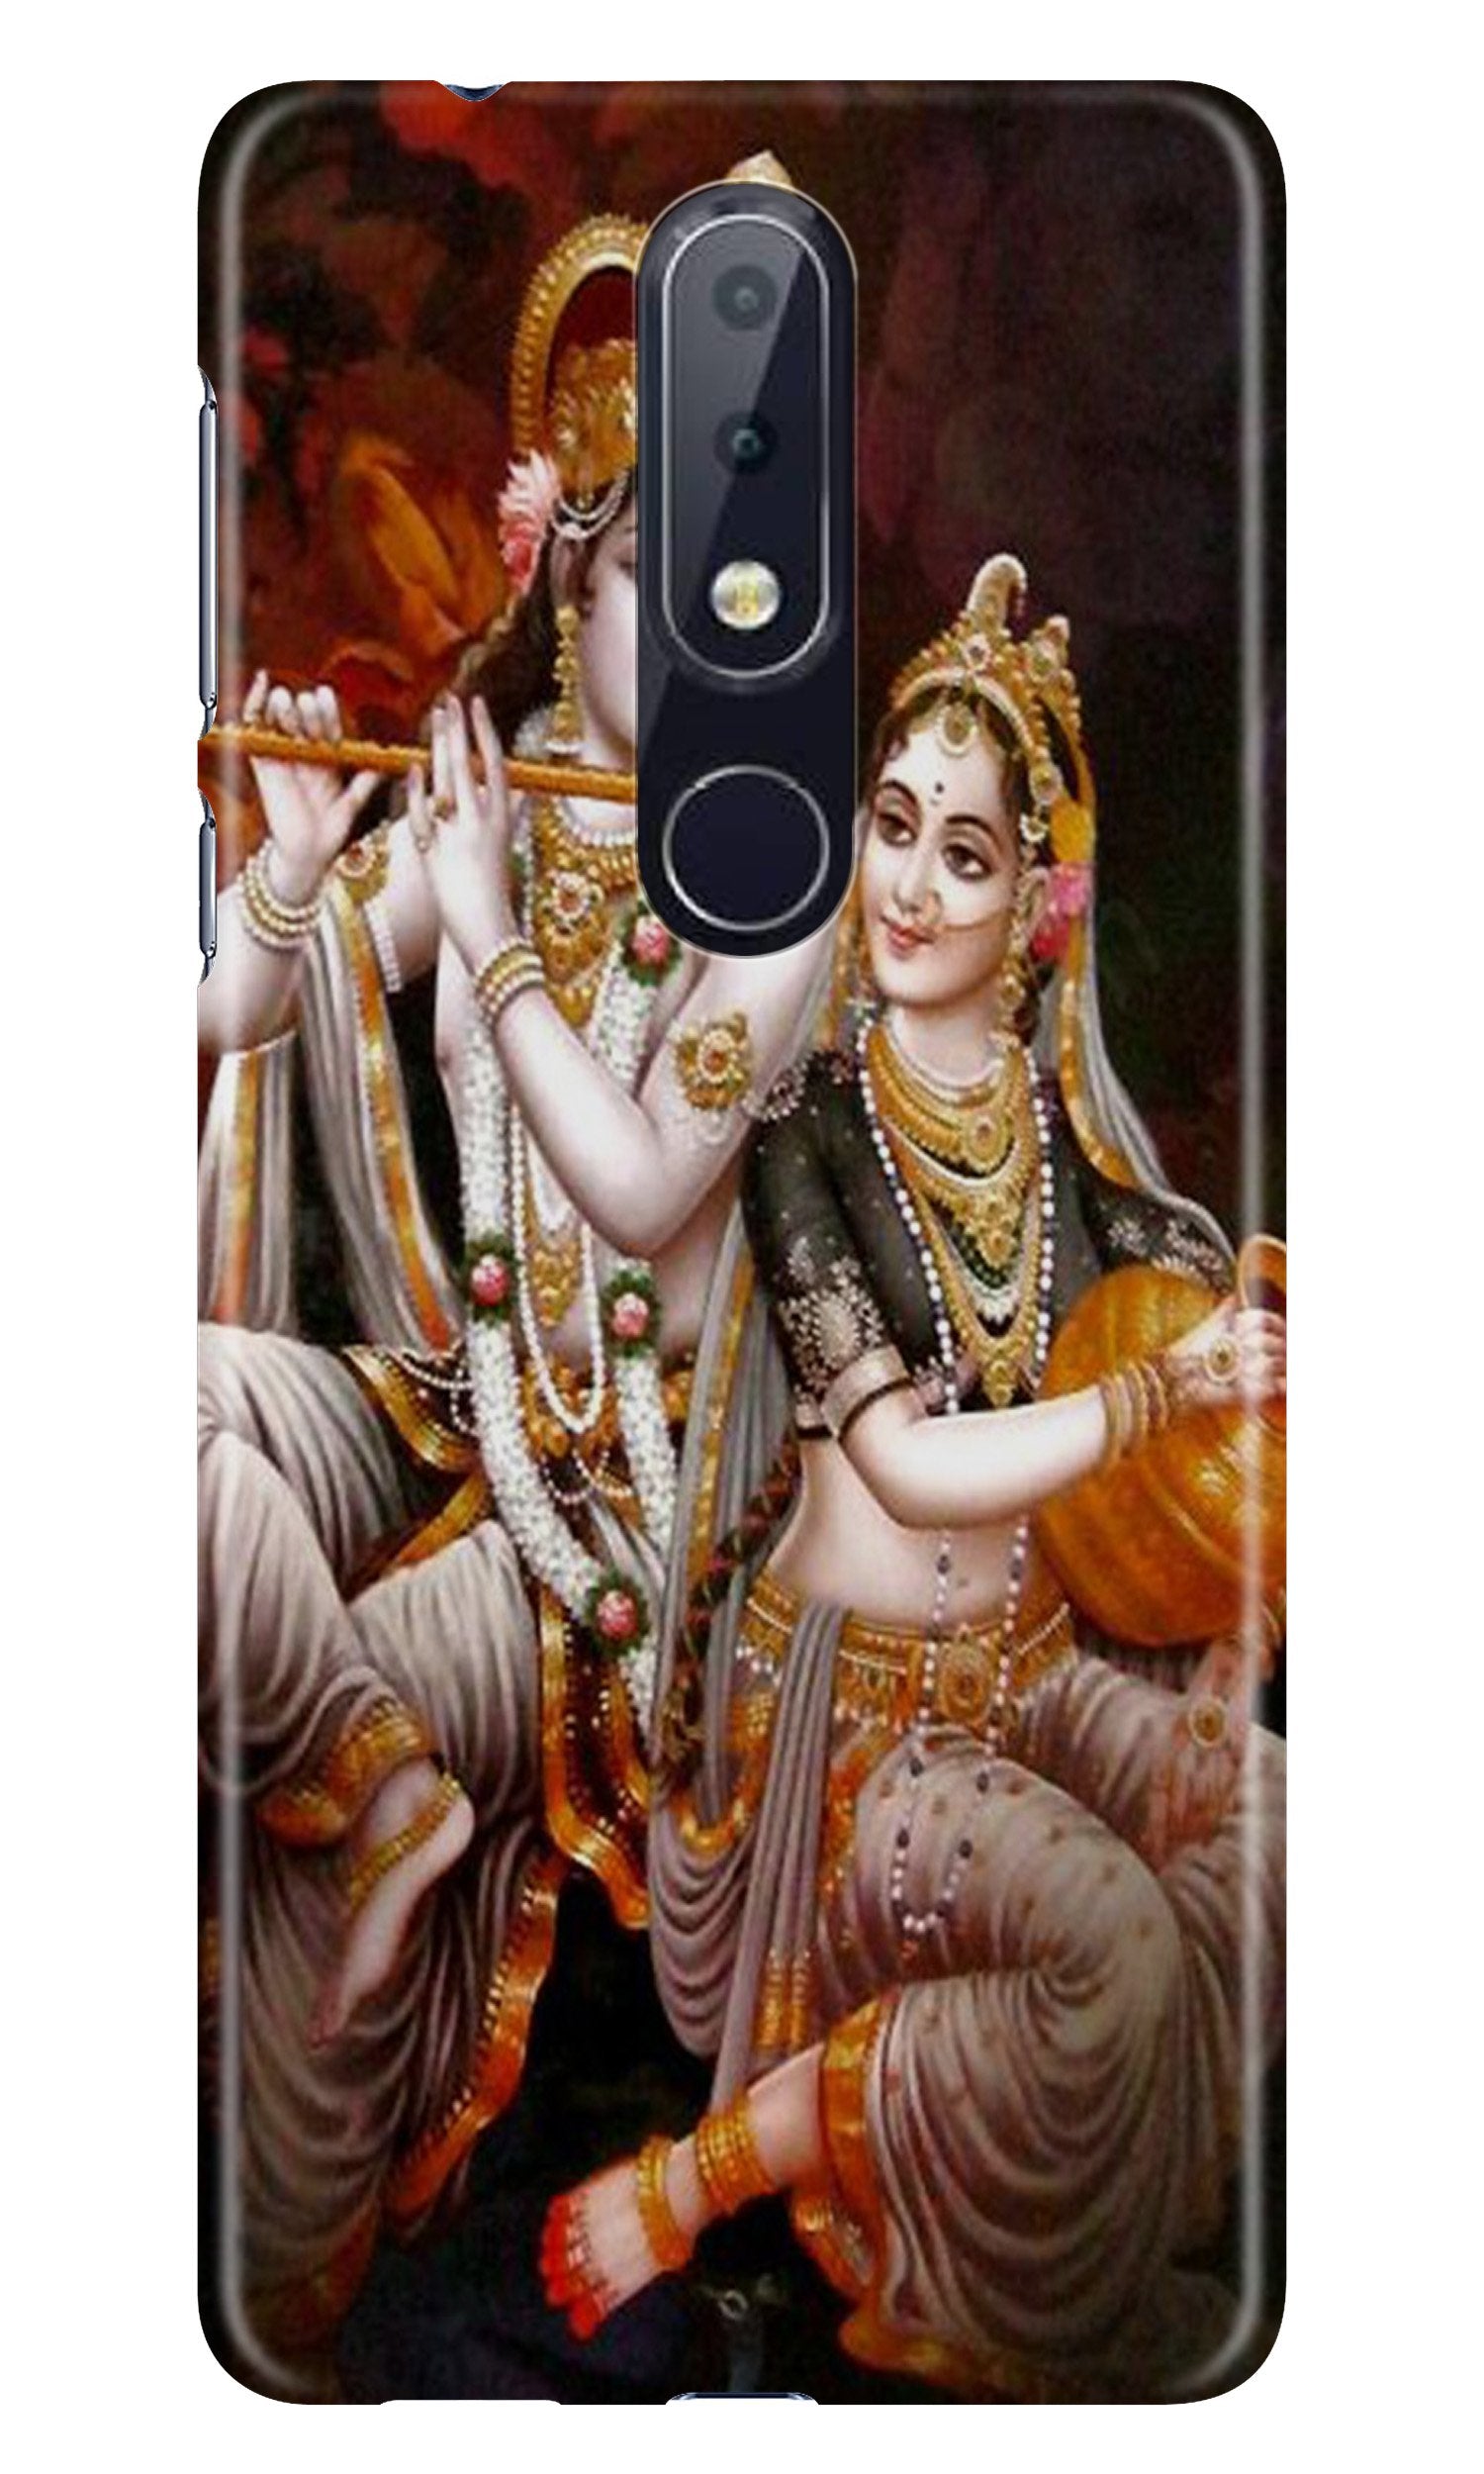 Radha Krishna Case for Nokia 6.1 Plus (Design No. 292)